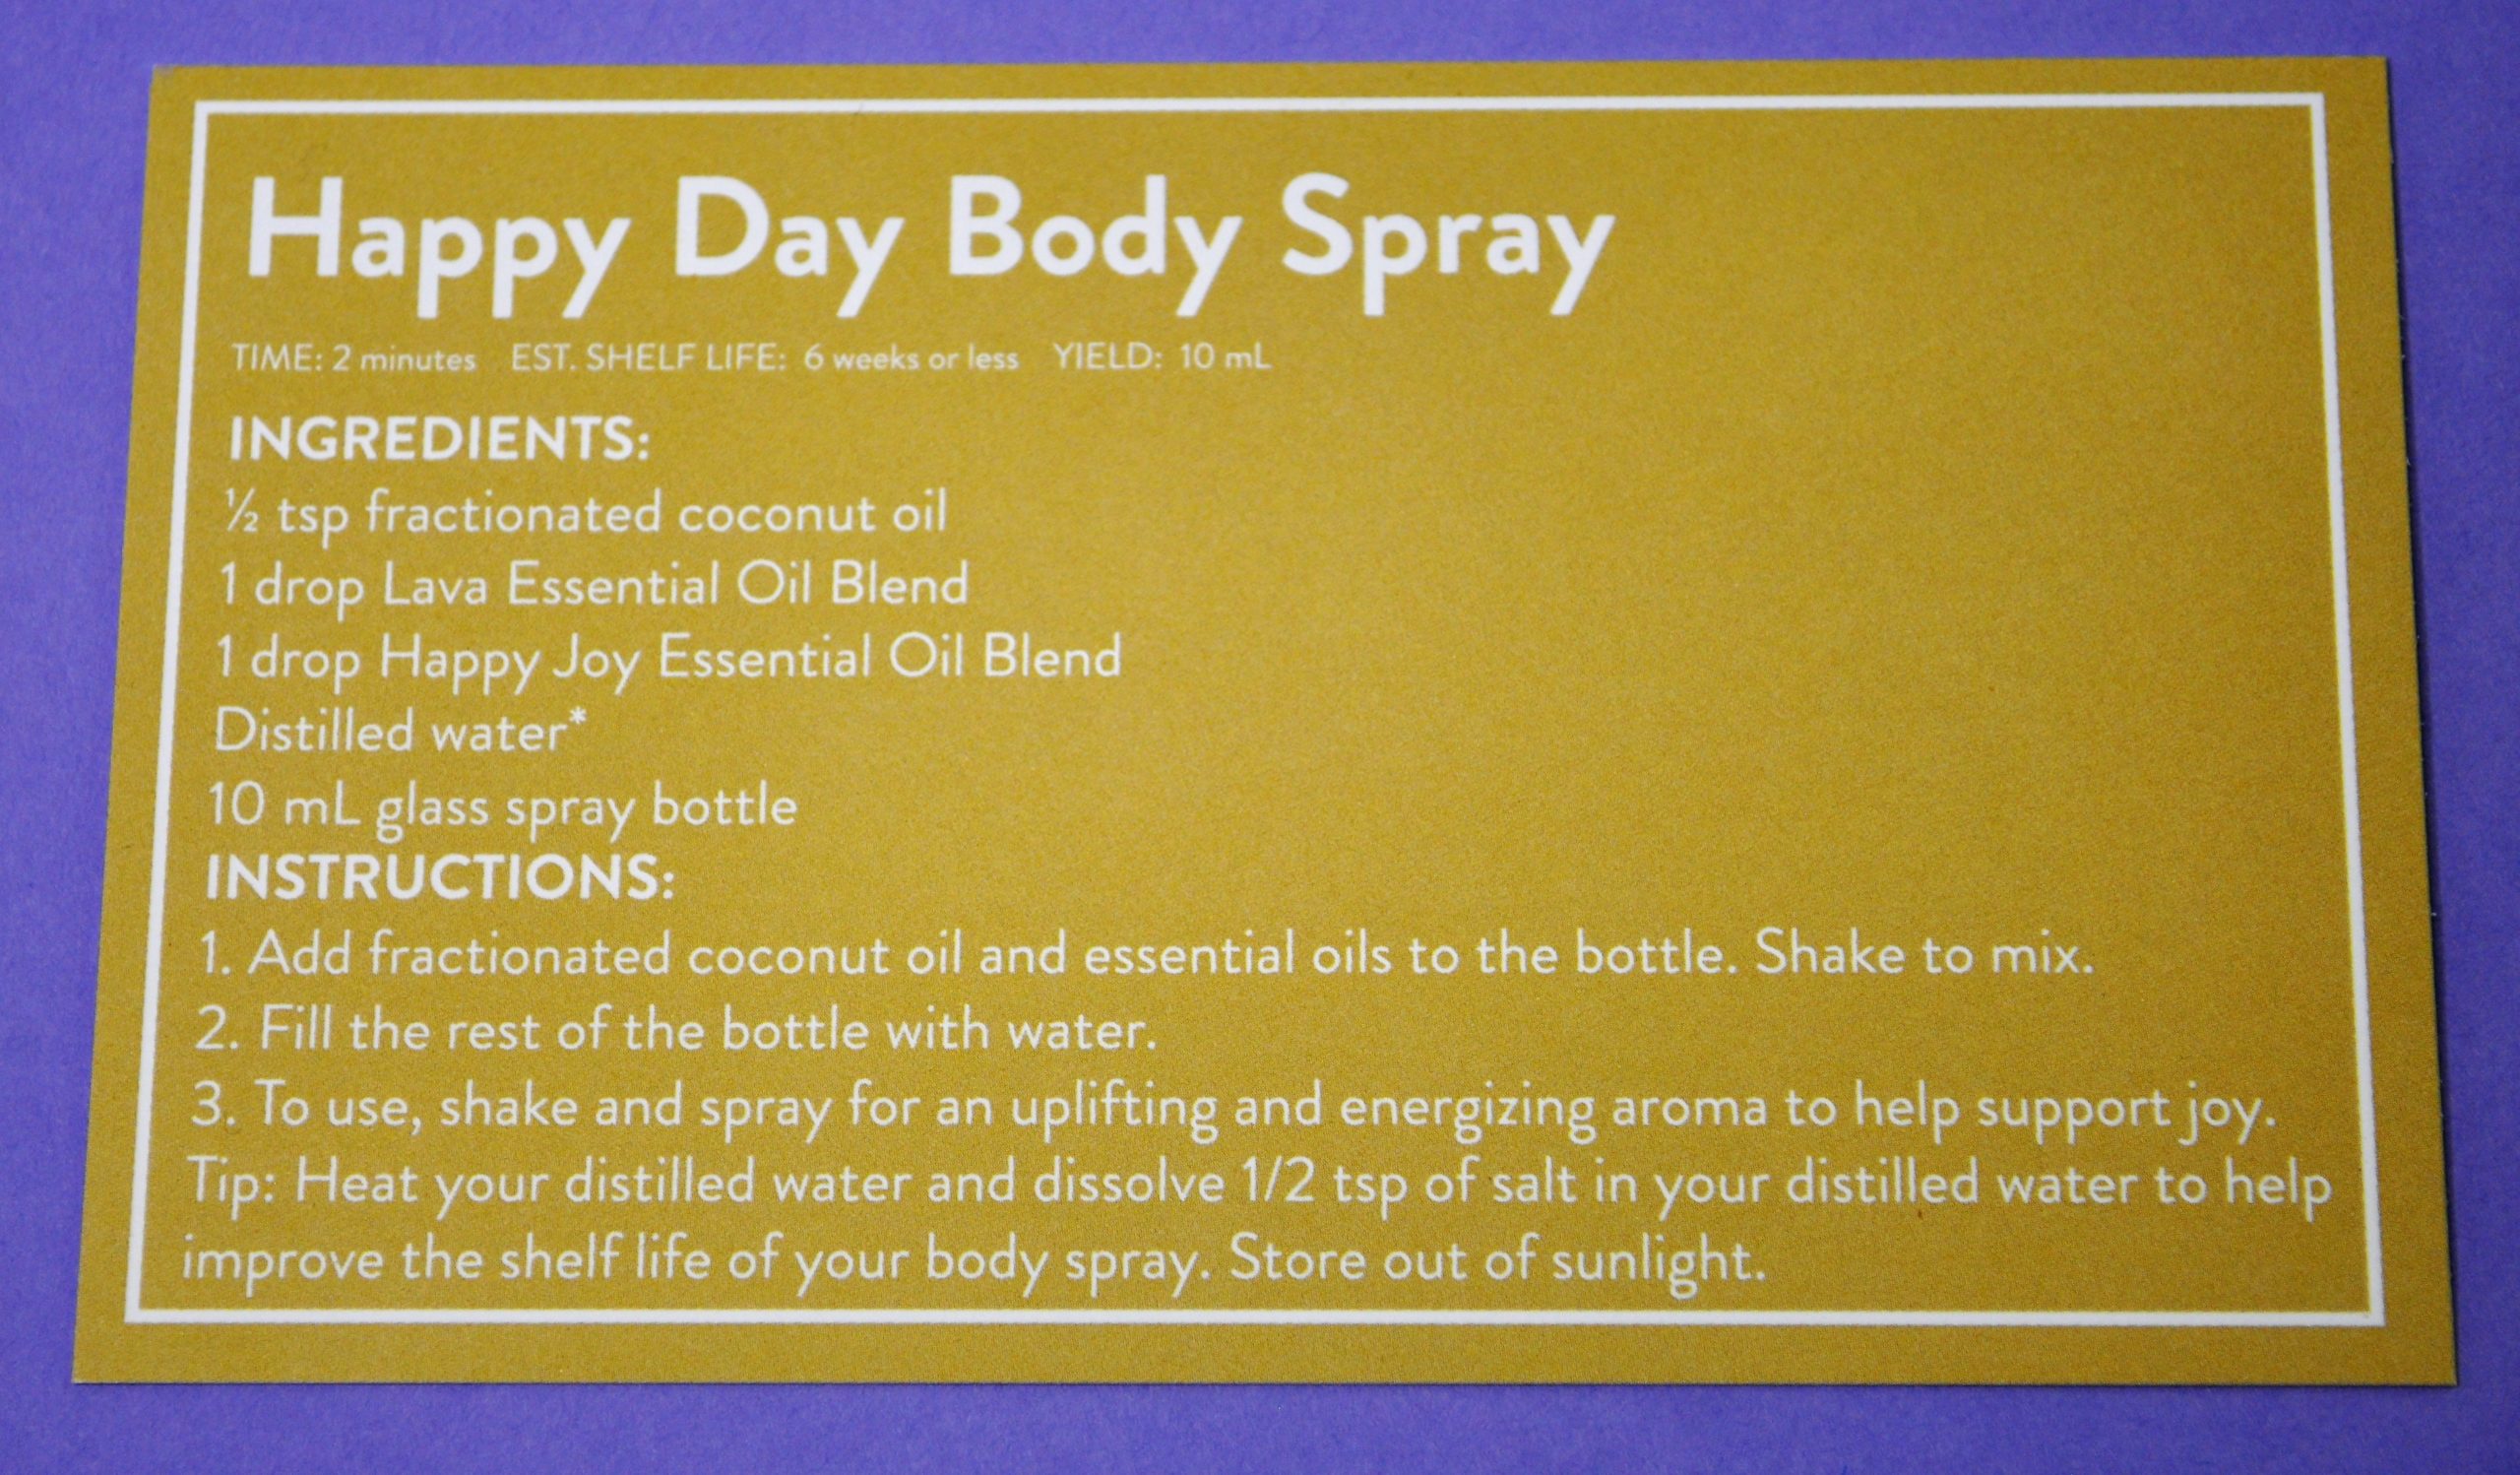 Happy Day Body Spray Recipe Card